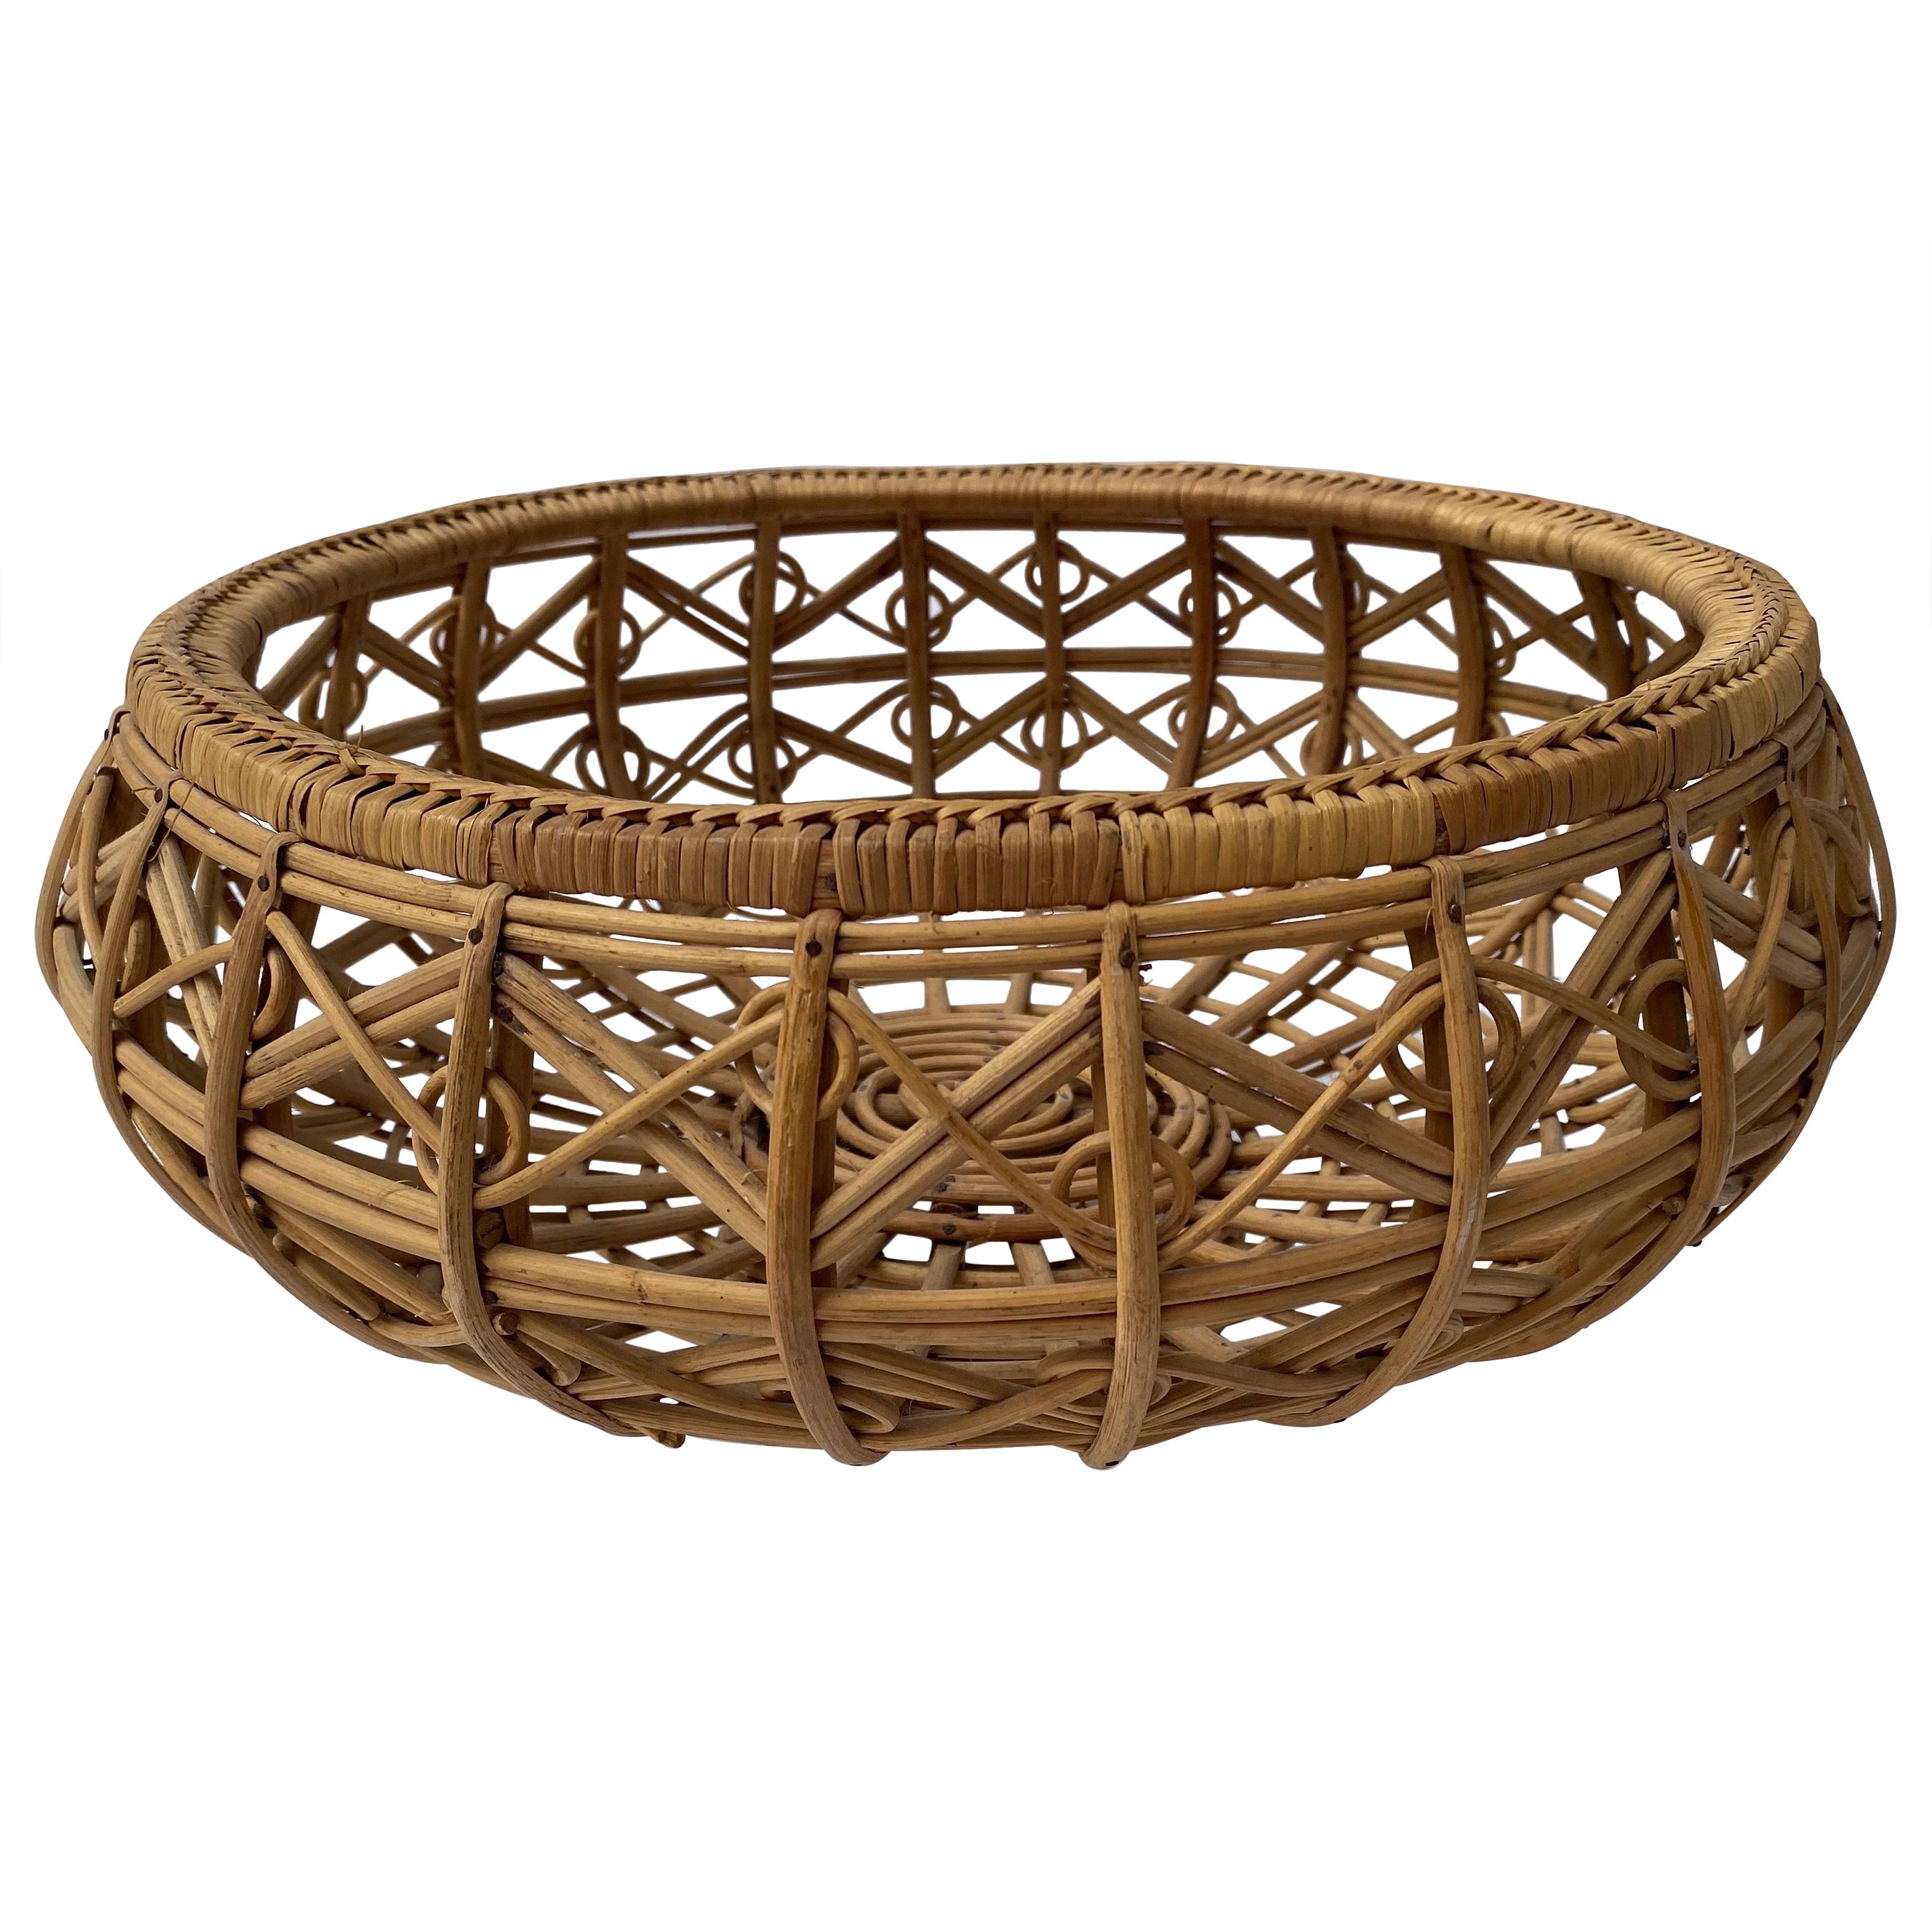 Franco Albini Style Wicker Basket